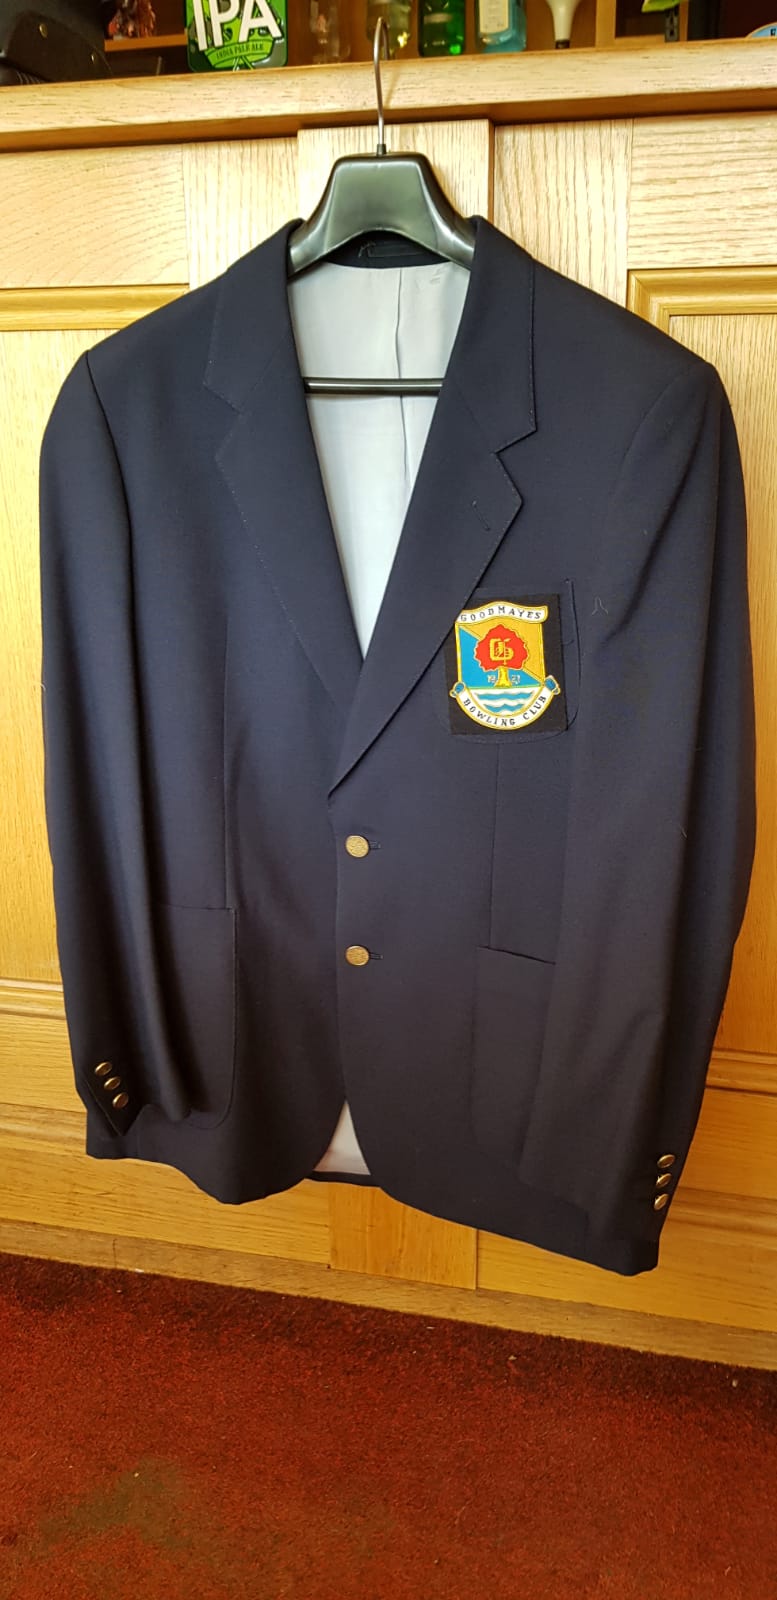 County jacket - good cond. See Ali Yeoman